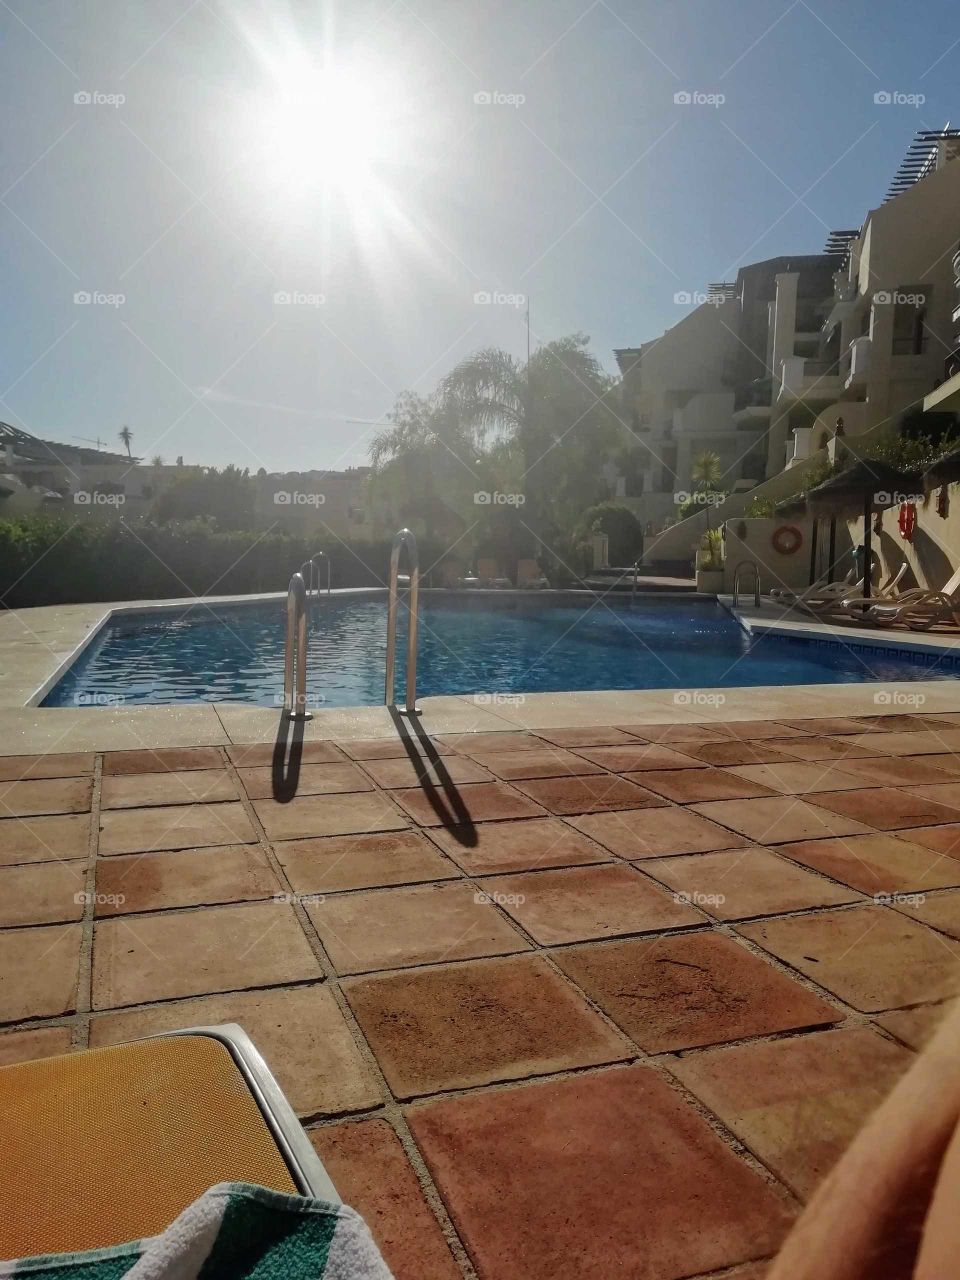 Swimming pool in the summer sun